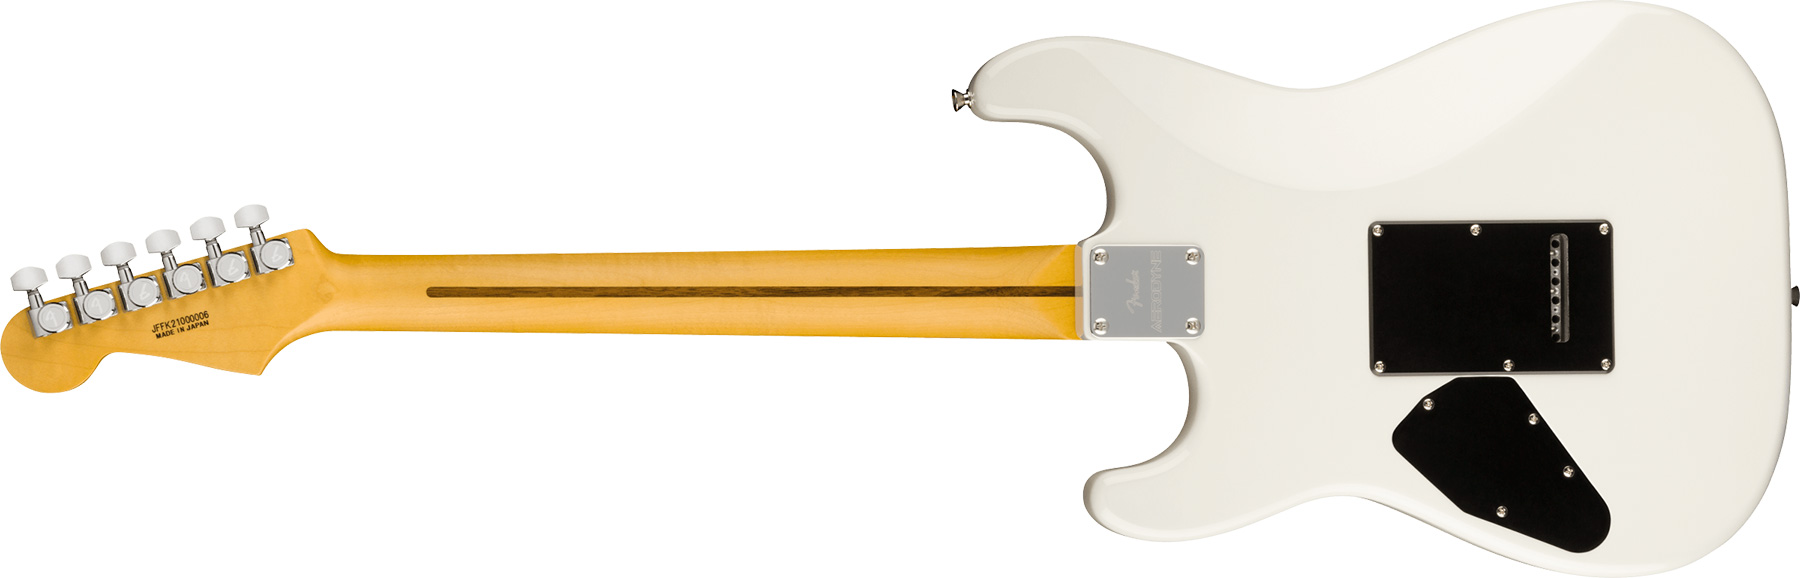 Fender Strat Aerodyne Special Jap 3s Trem Rw - Bright White - Str shape electric guitar - Variation 1